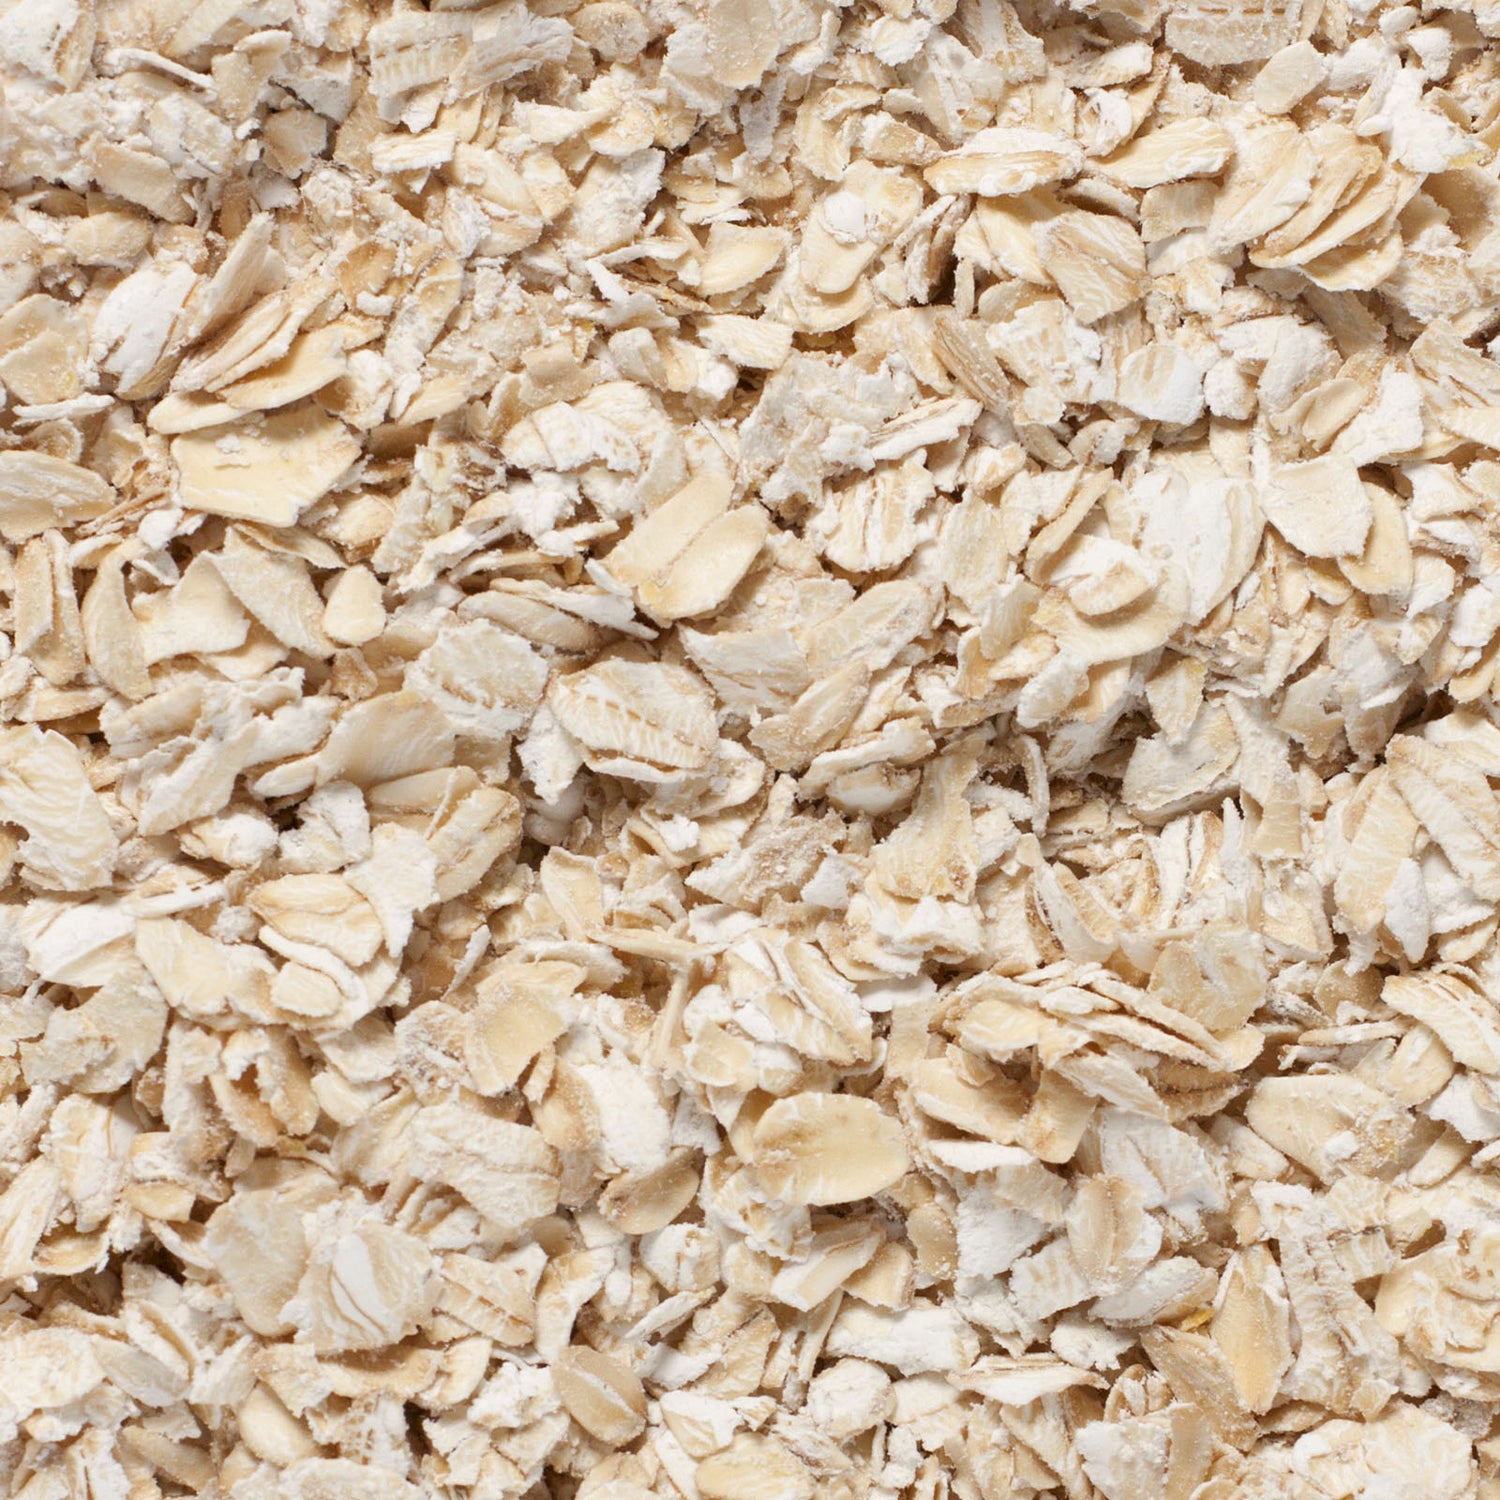 Ground oatmeal